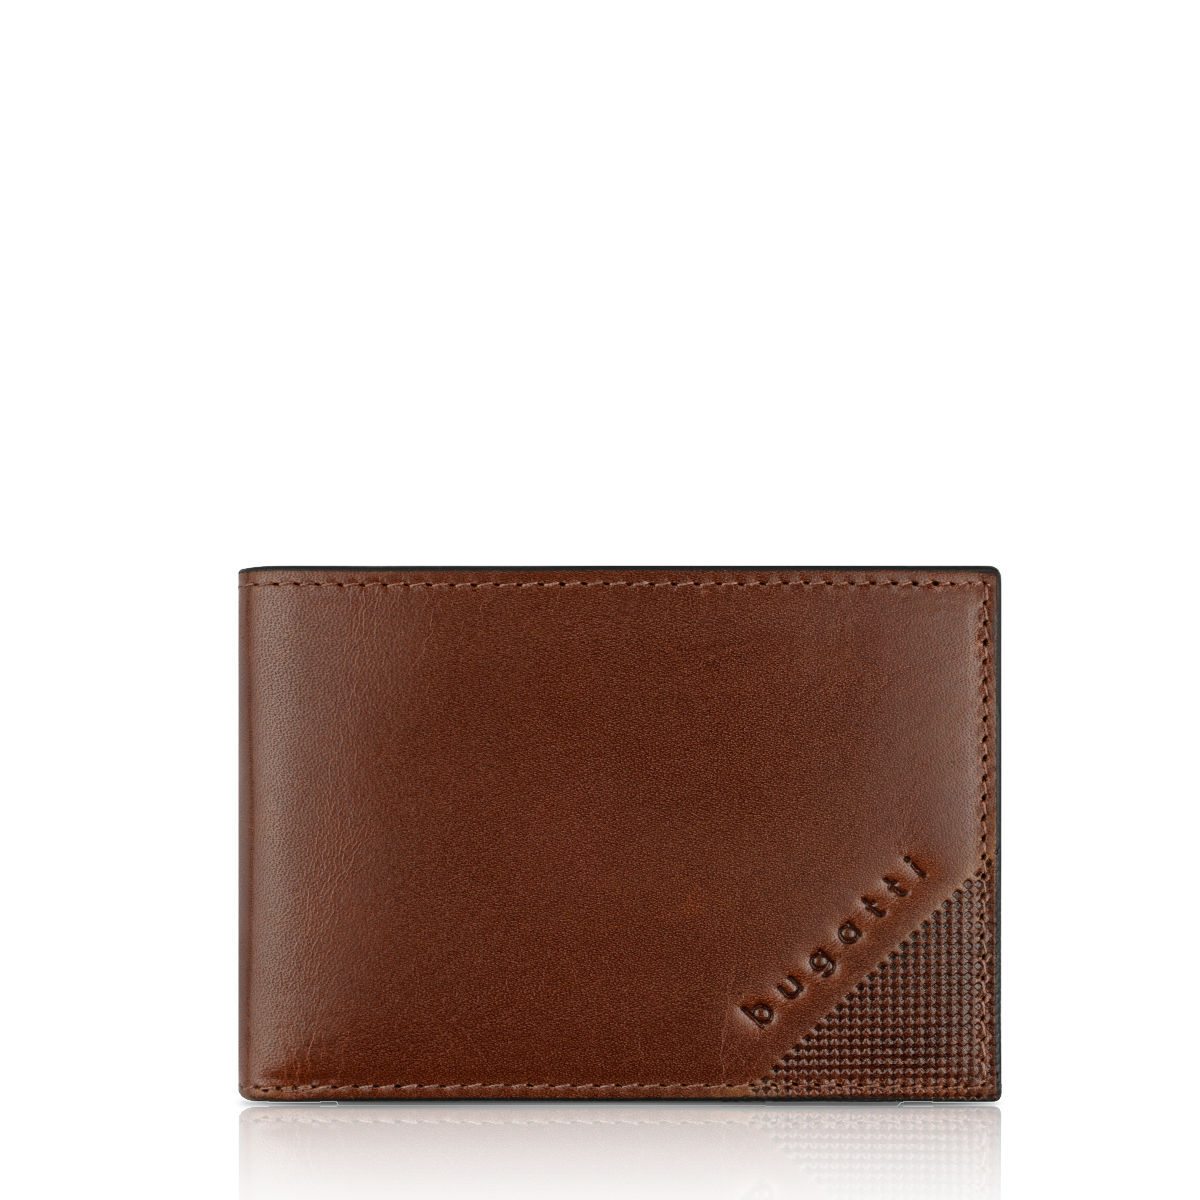 Bugatti men\'s leather brown wallet - cognac